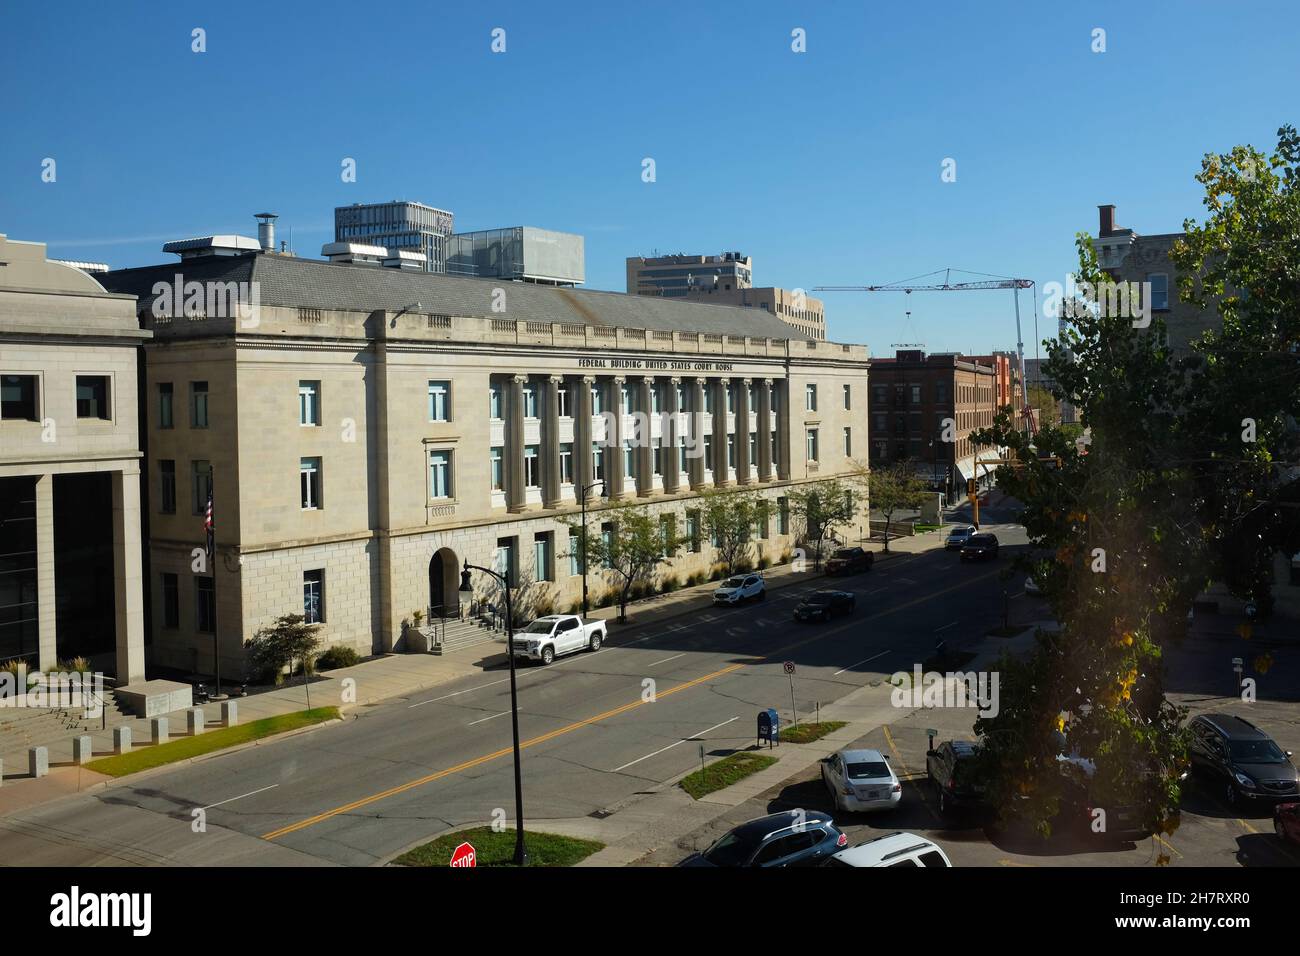 FARGO, DAKOTA DEL NORTE - 4 DE OCTUBRE de 2021: El Tribunal Federal Quentin N. Burdick, en la esquina de First Avenue y Roberts Street. Foto de stock